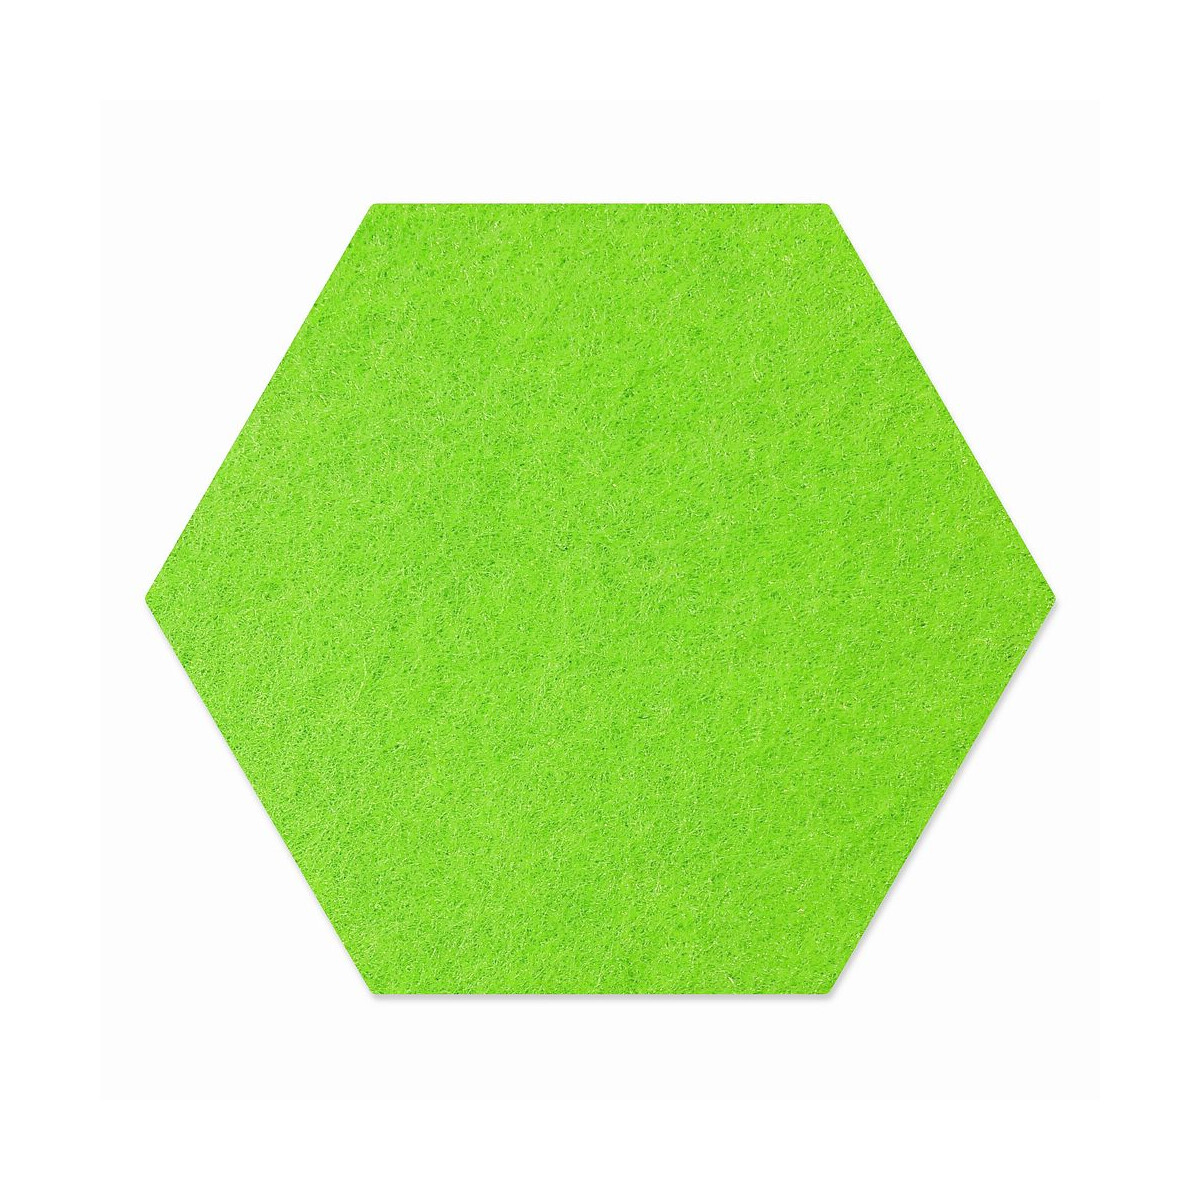 1 x FILZ Untersetzer Wabe, Hexagon 21 cm - apfelgrün